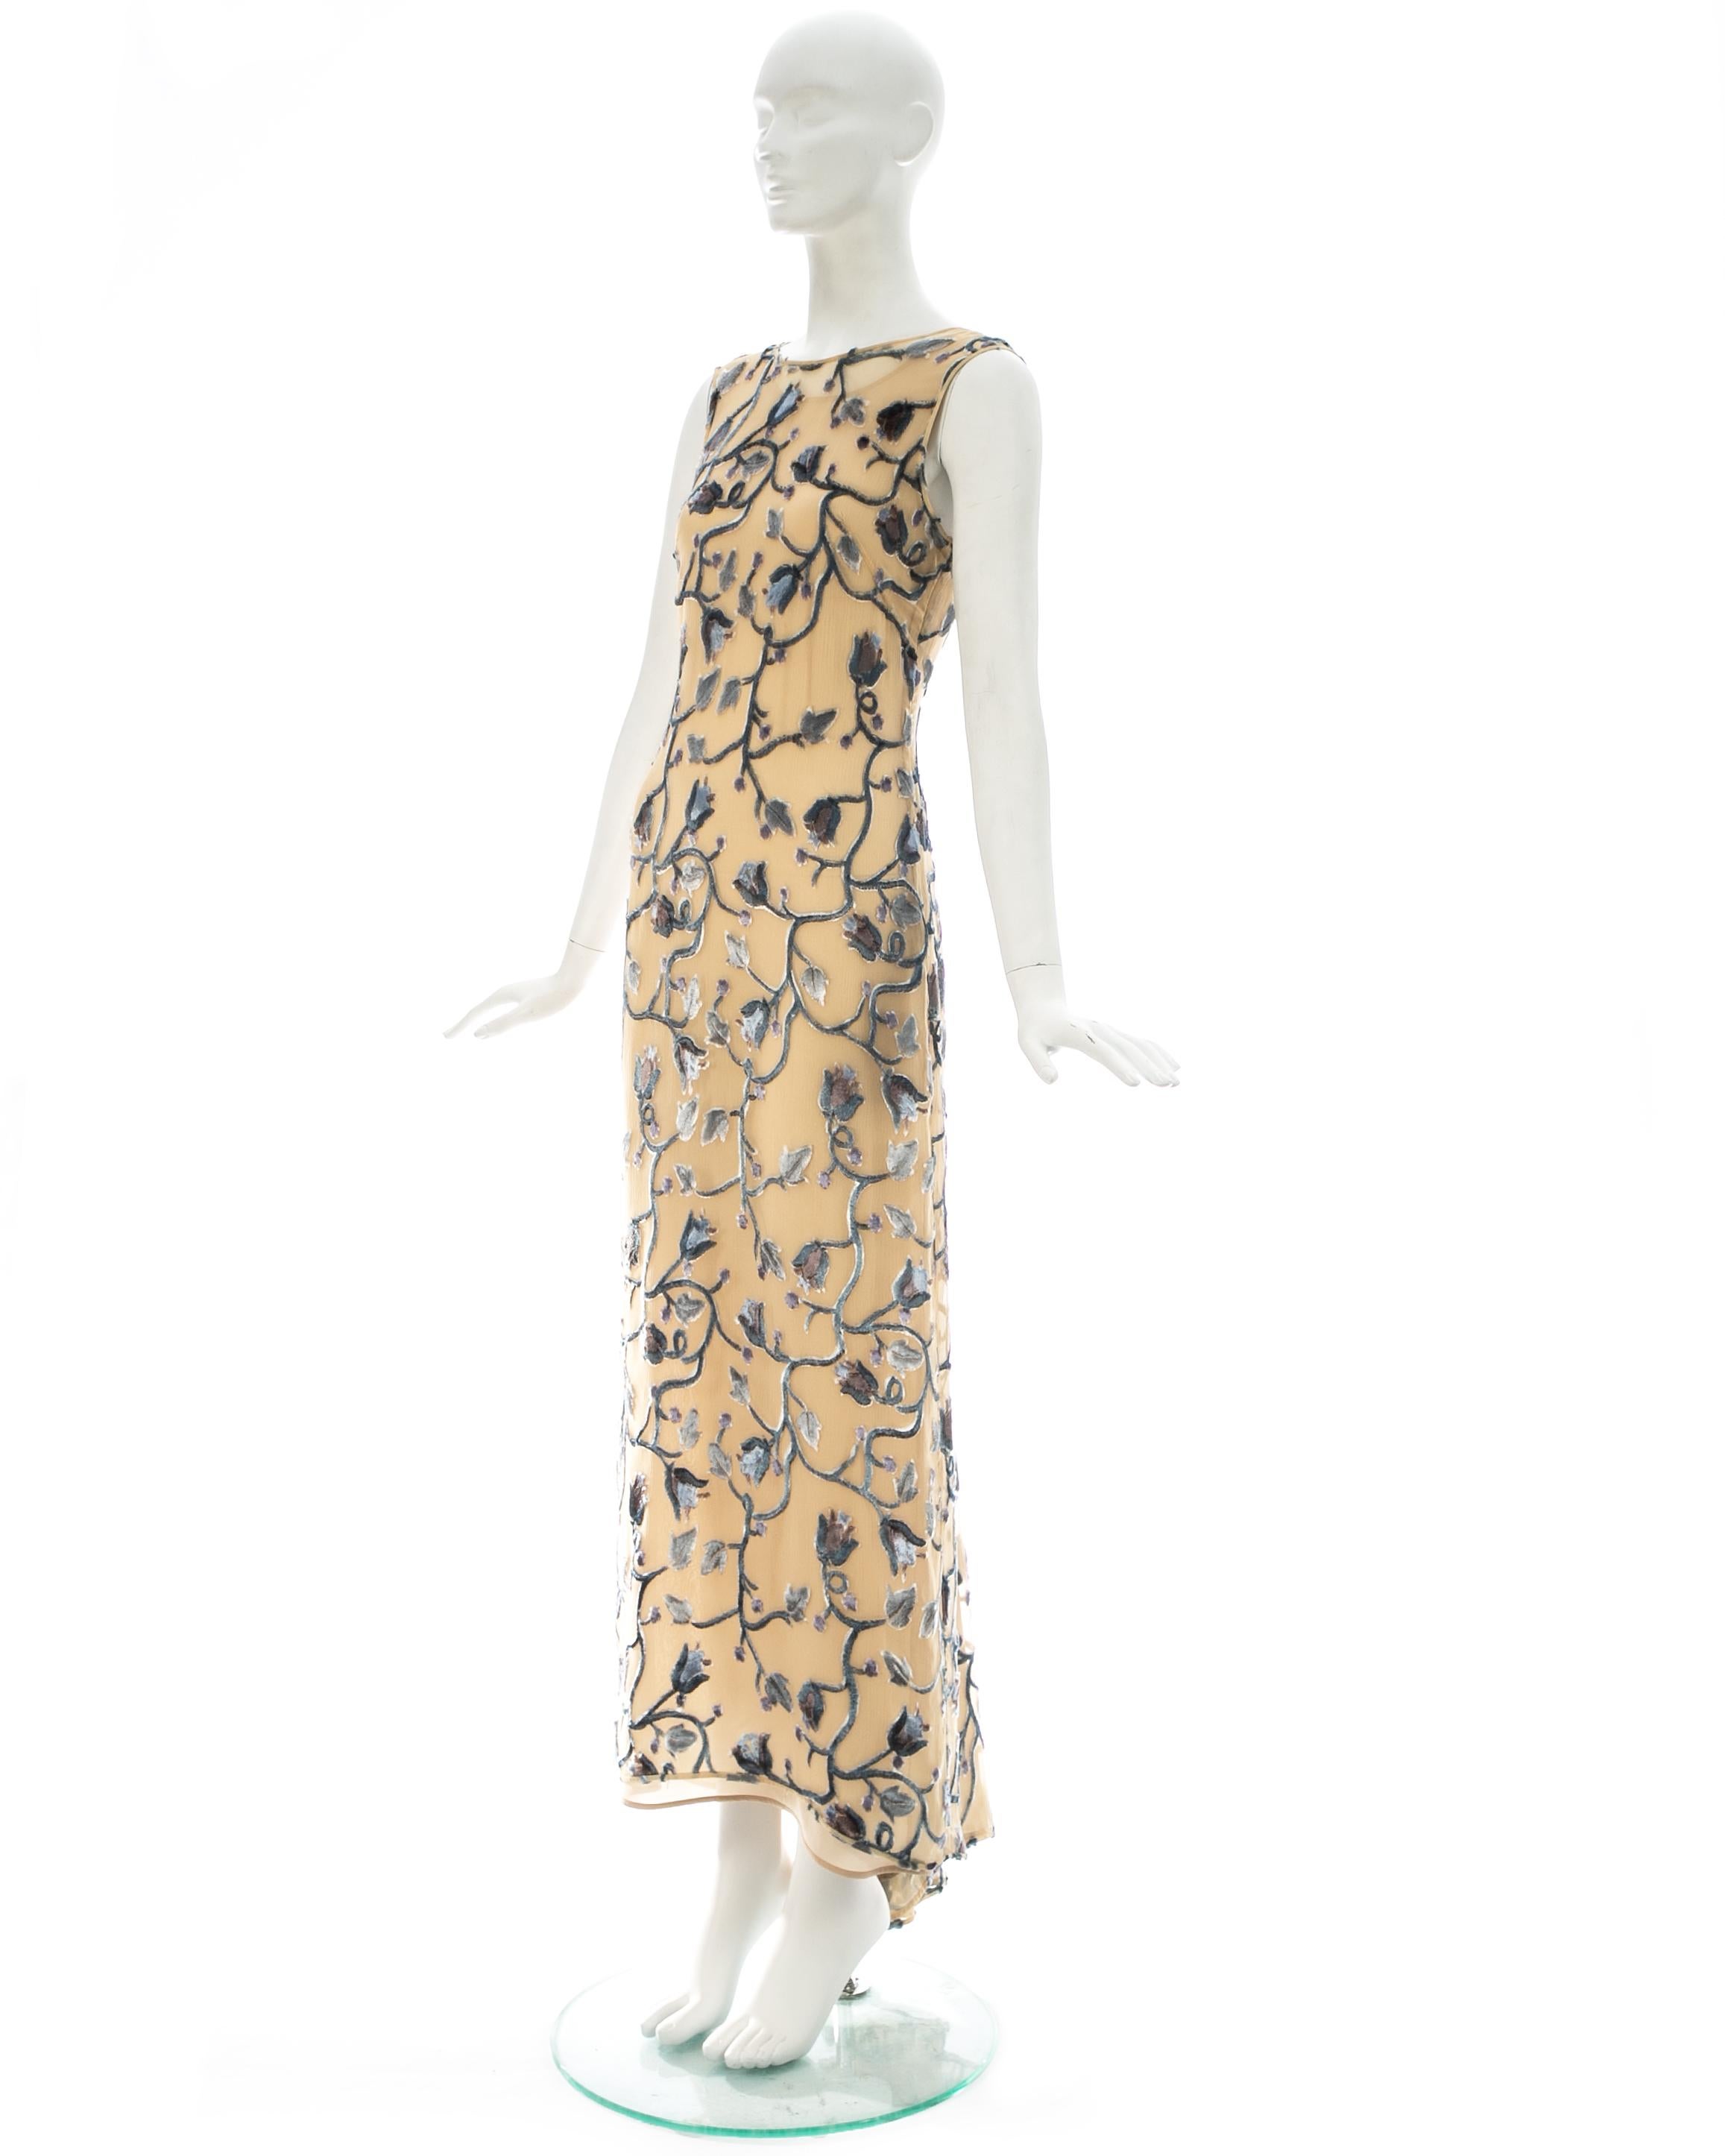 Beige Prada ivory silk devoré floral maxi dress with train and slip dress, ss 1997